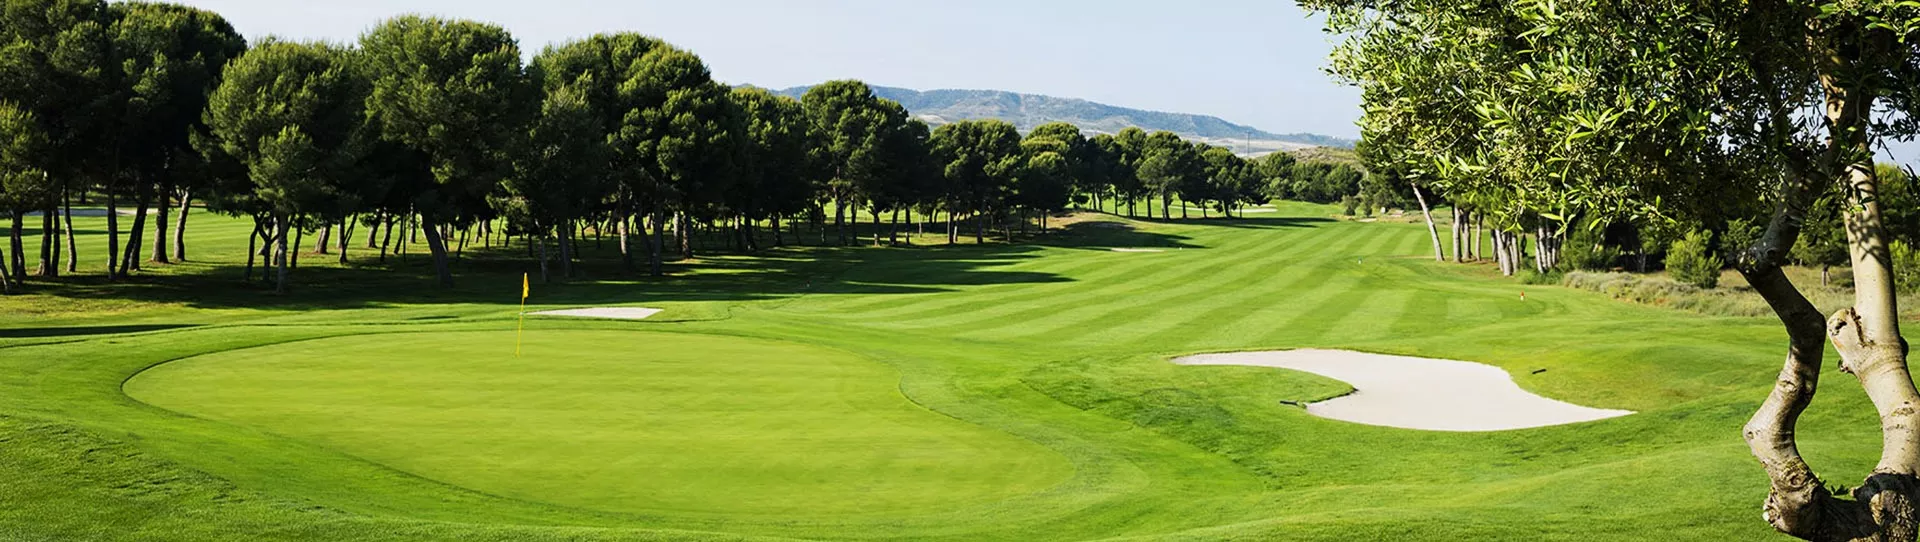 Spain golf courses - La Peñaza Golf Course - Photo 1